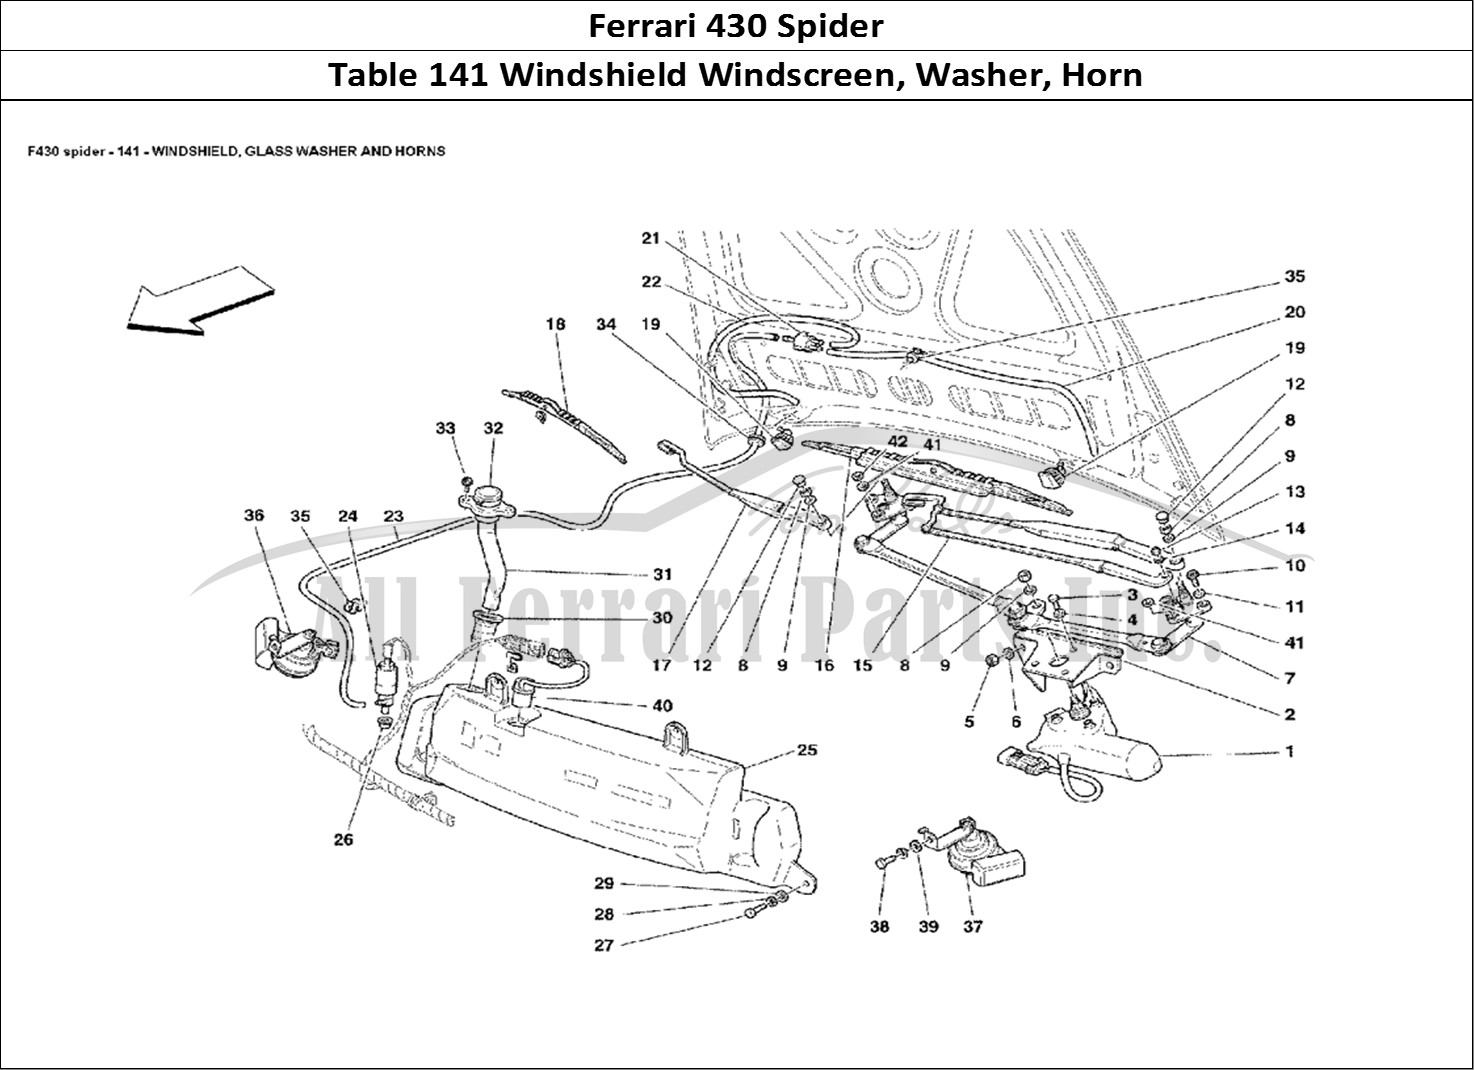 Ferrari Parts Ferrari 430 Spider Page 141 Windshield, Glass Washer